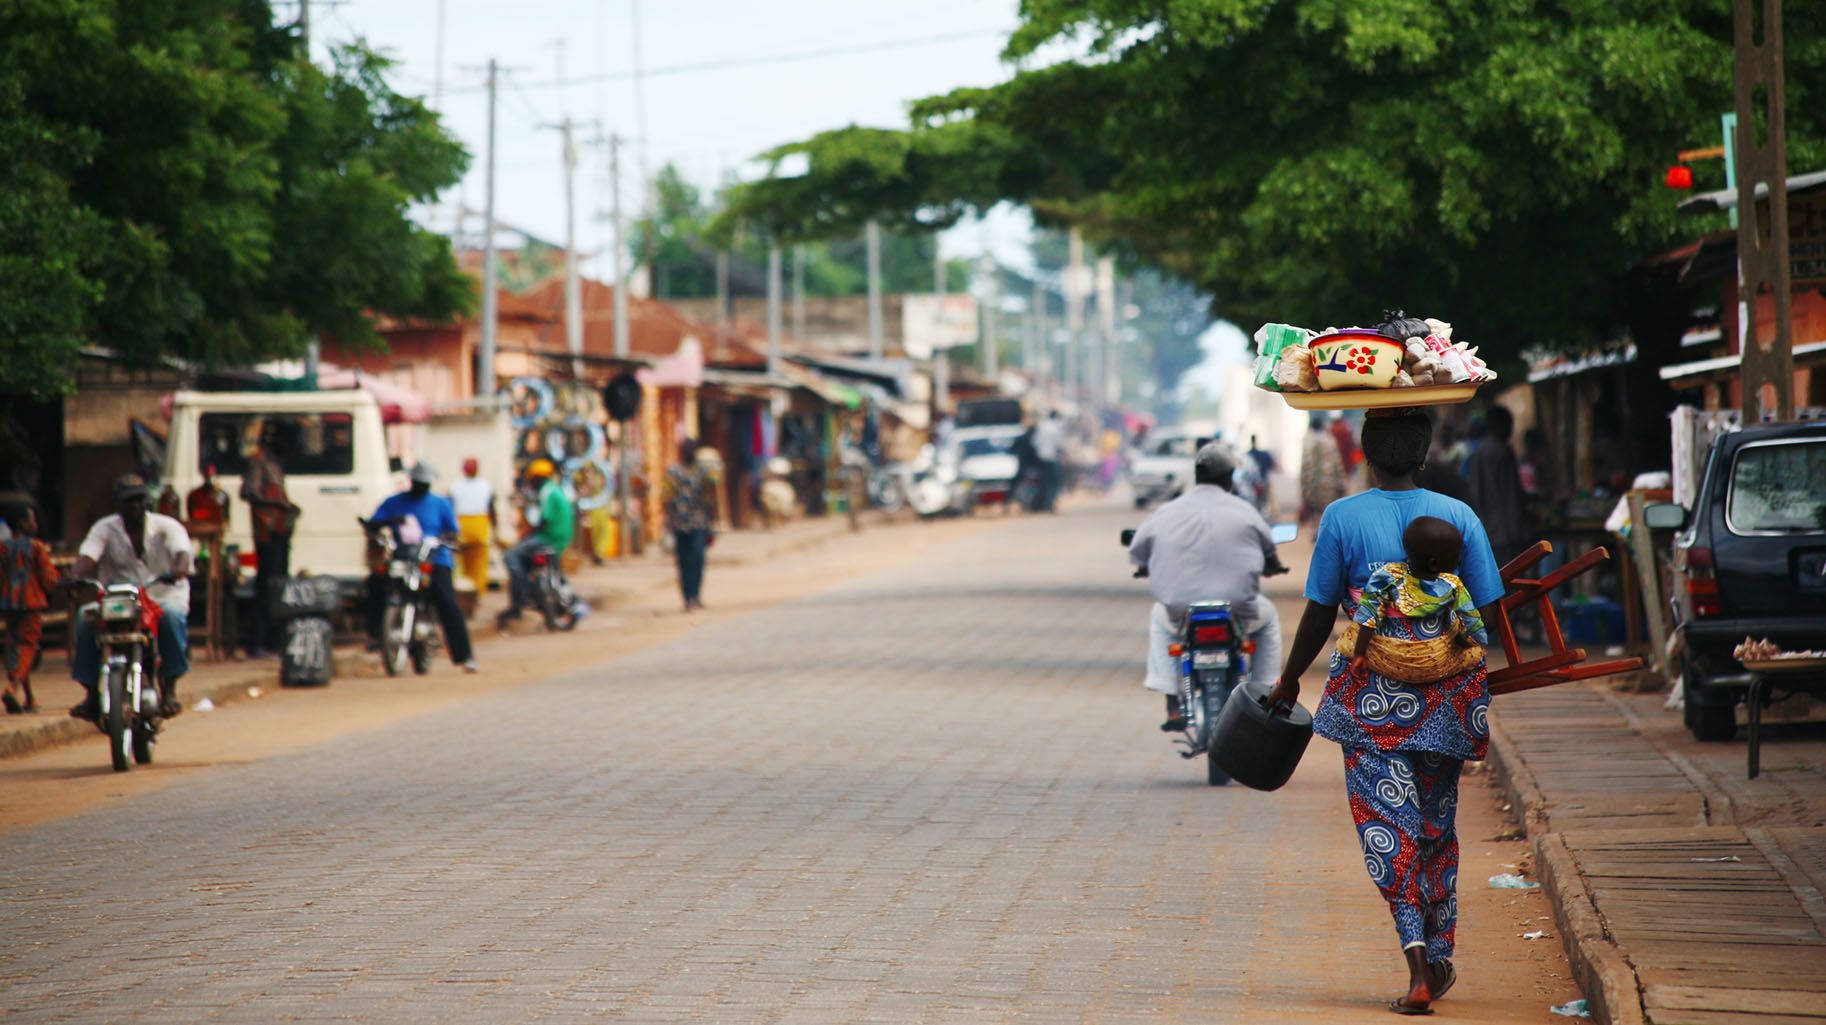 Benin Road Picture